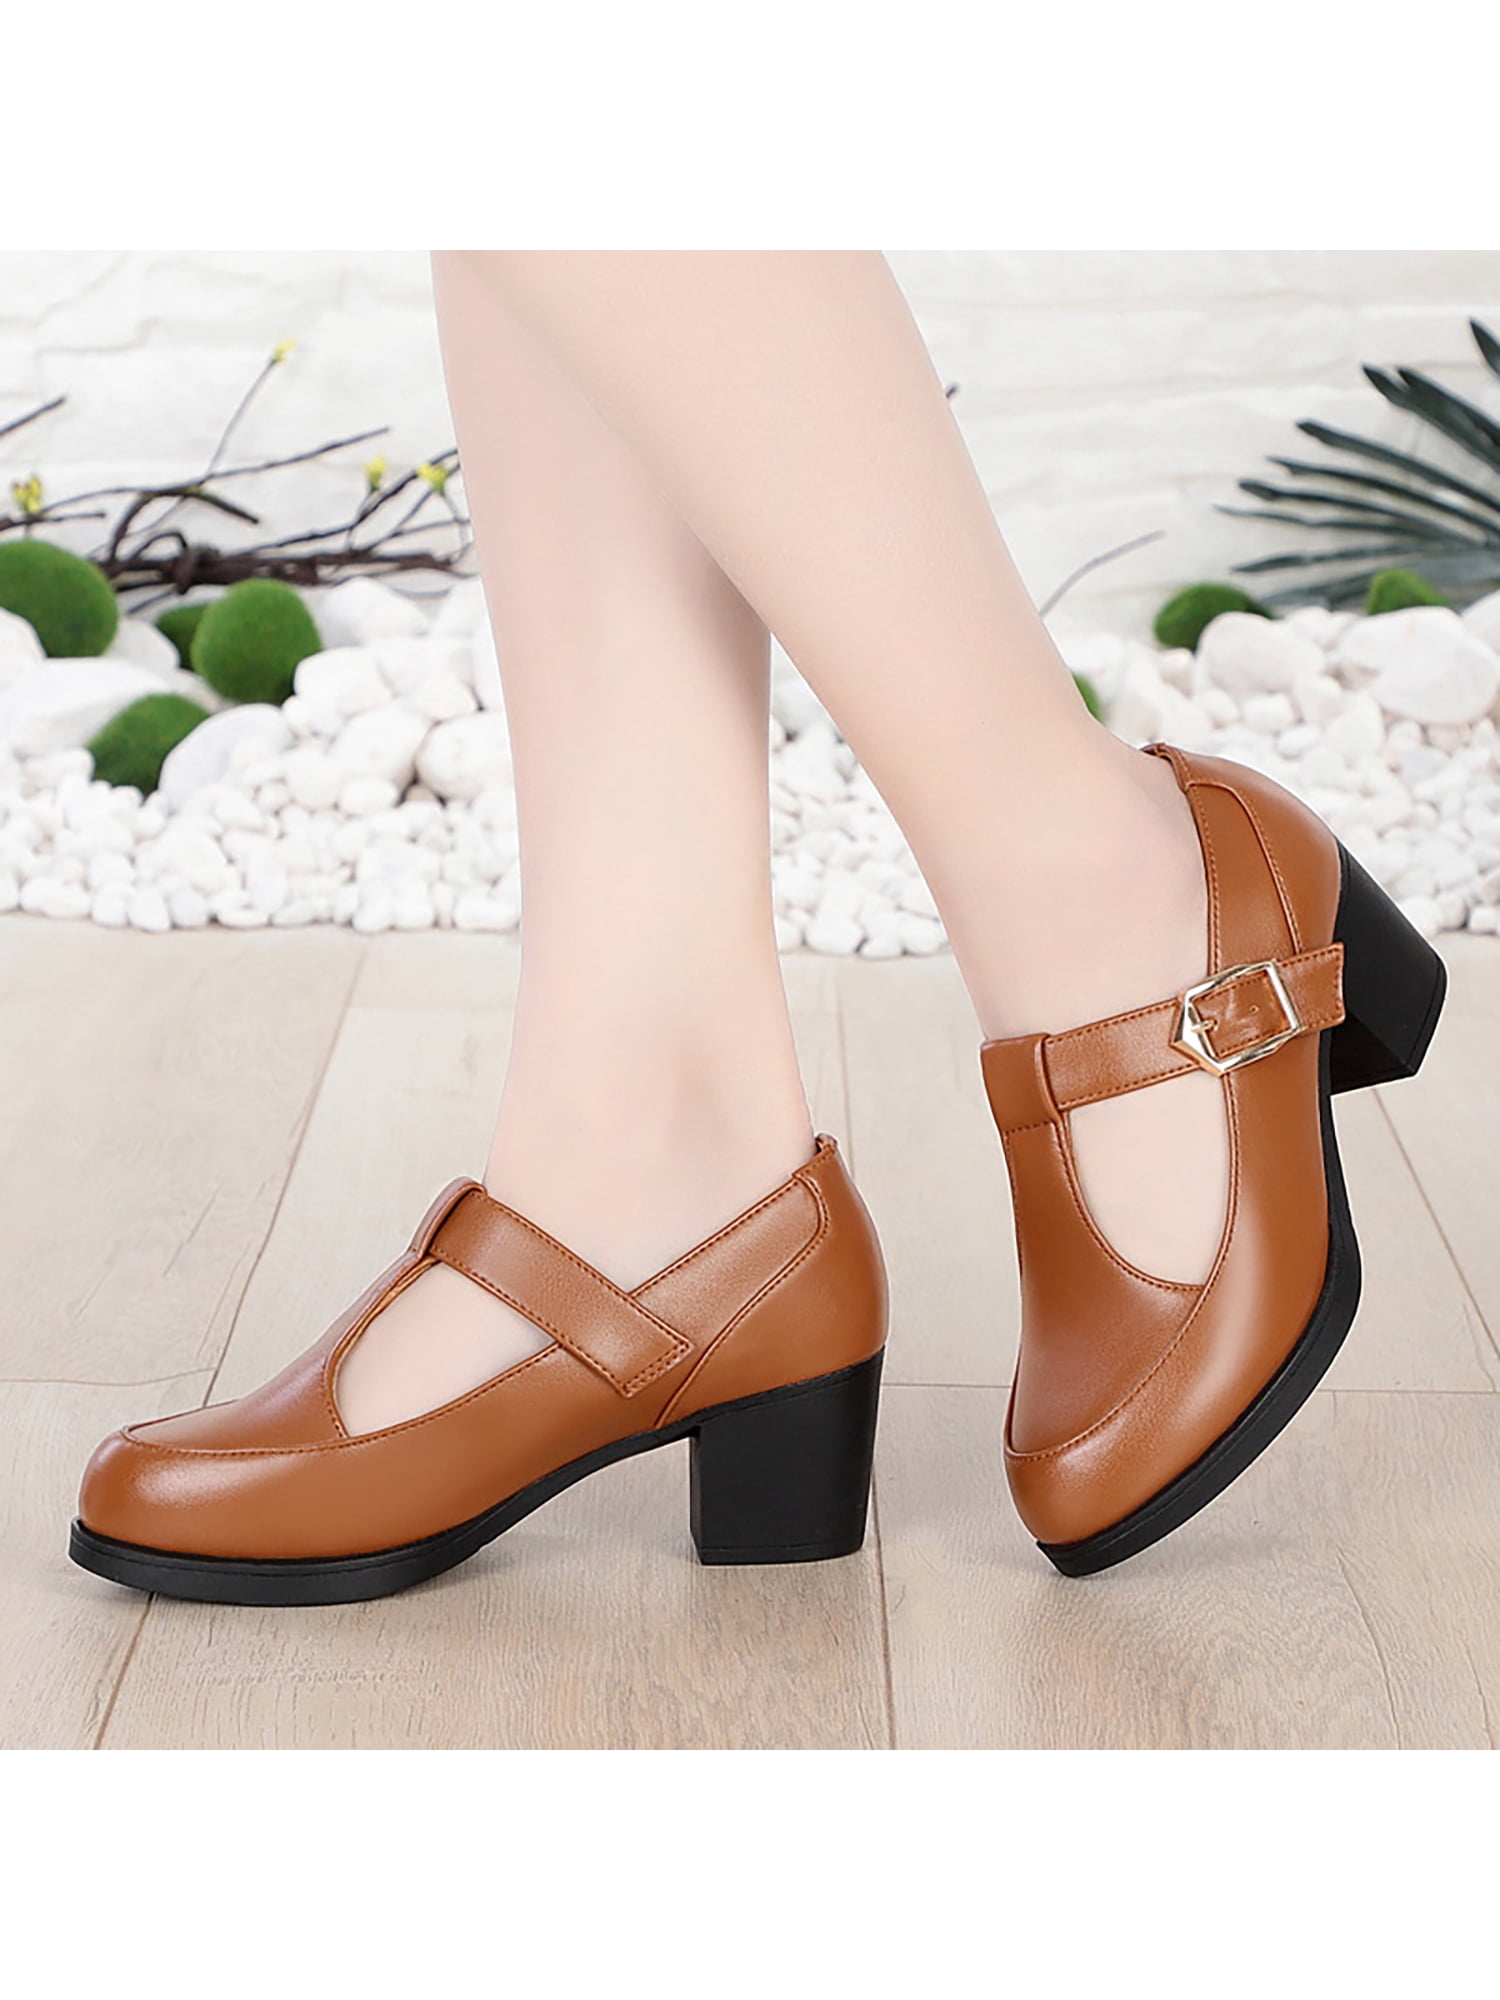 Ymiytan Ladies Fashion Casual Pump Outdoor Comfort Pointed Toe High Heels  Pumps Walking Anti-Slip Dress Shoes Brown 7.5 